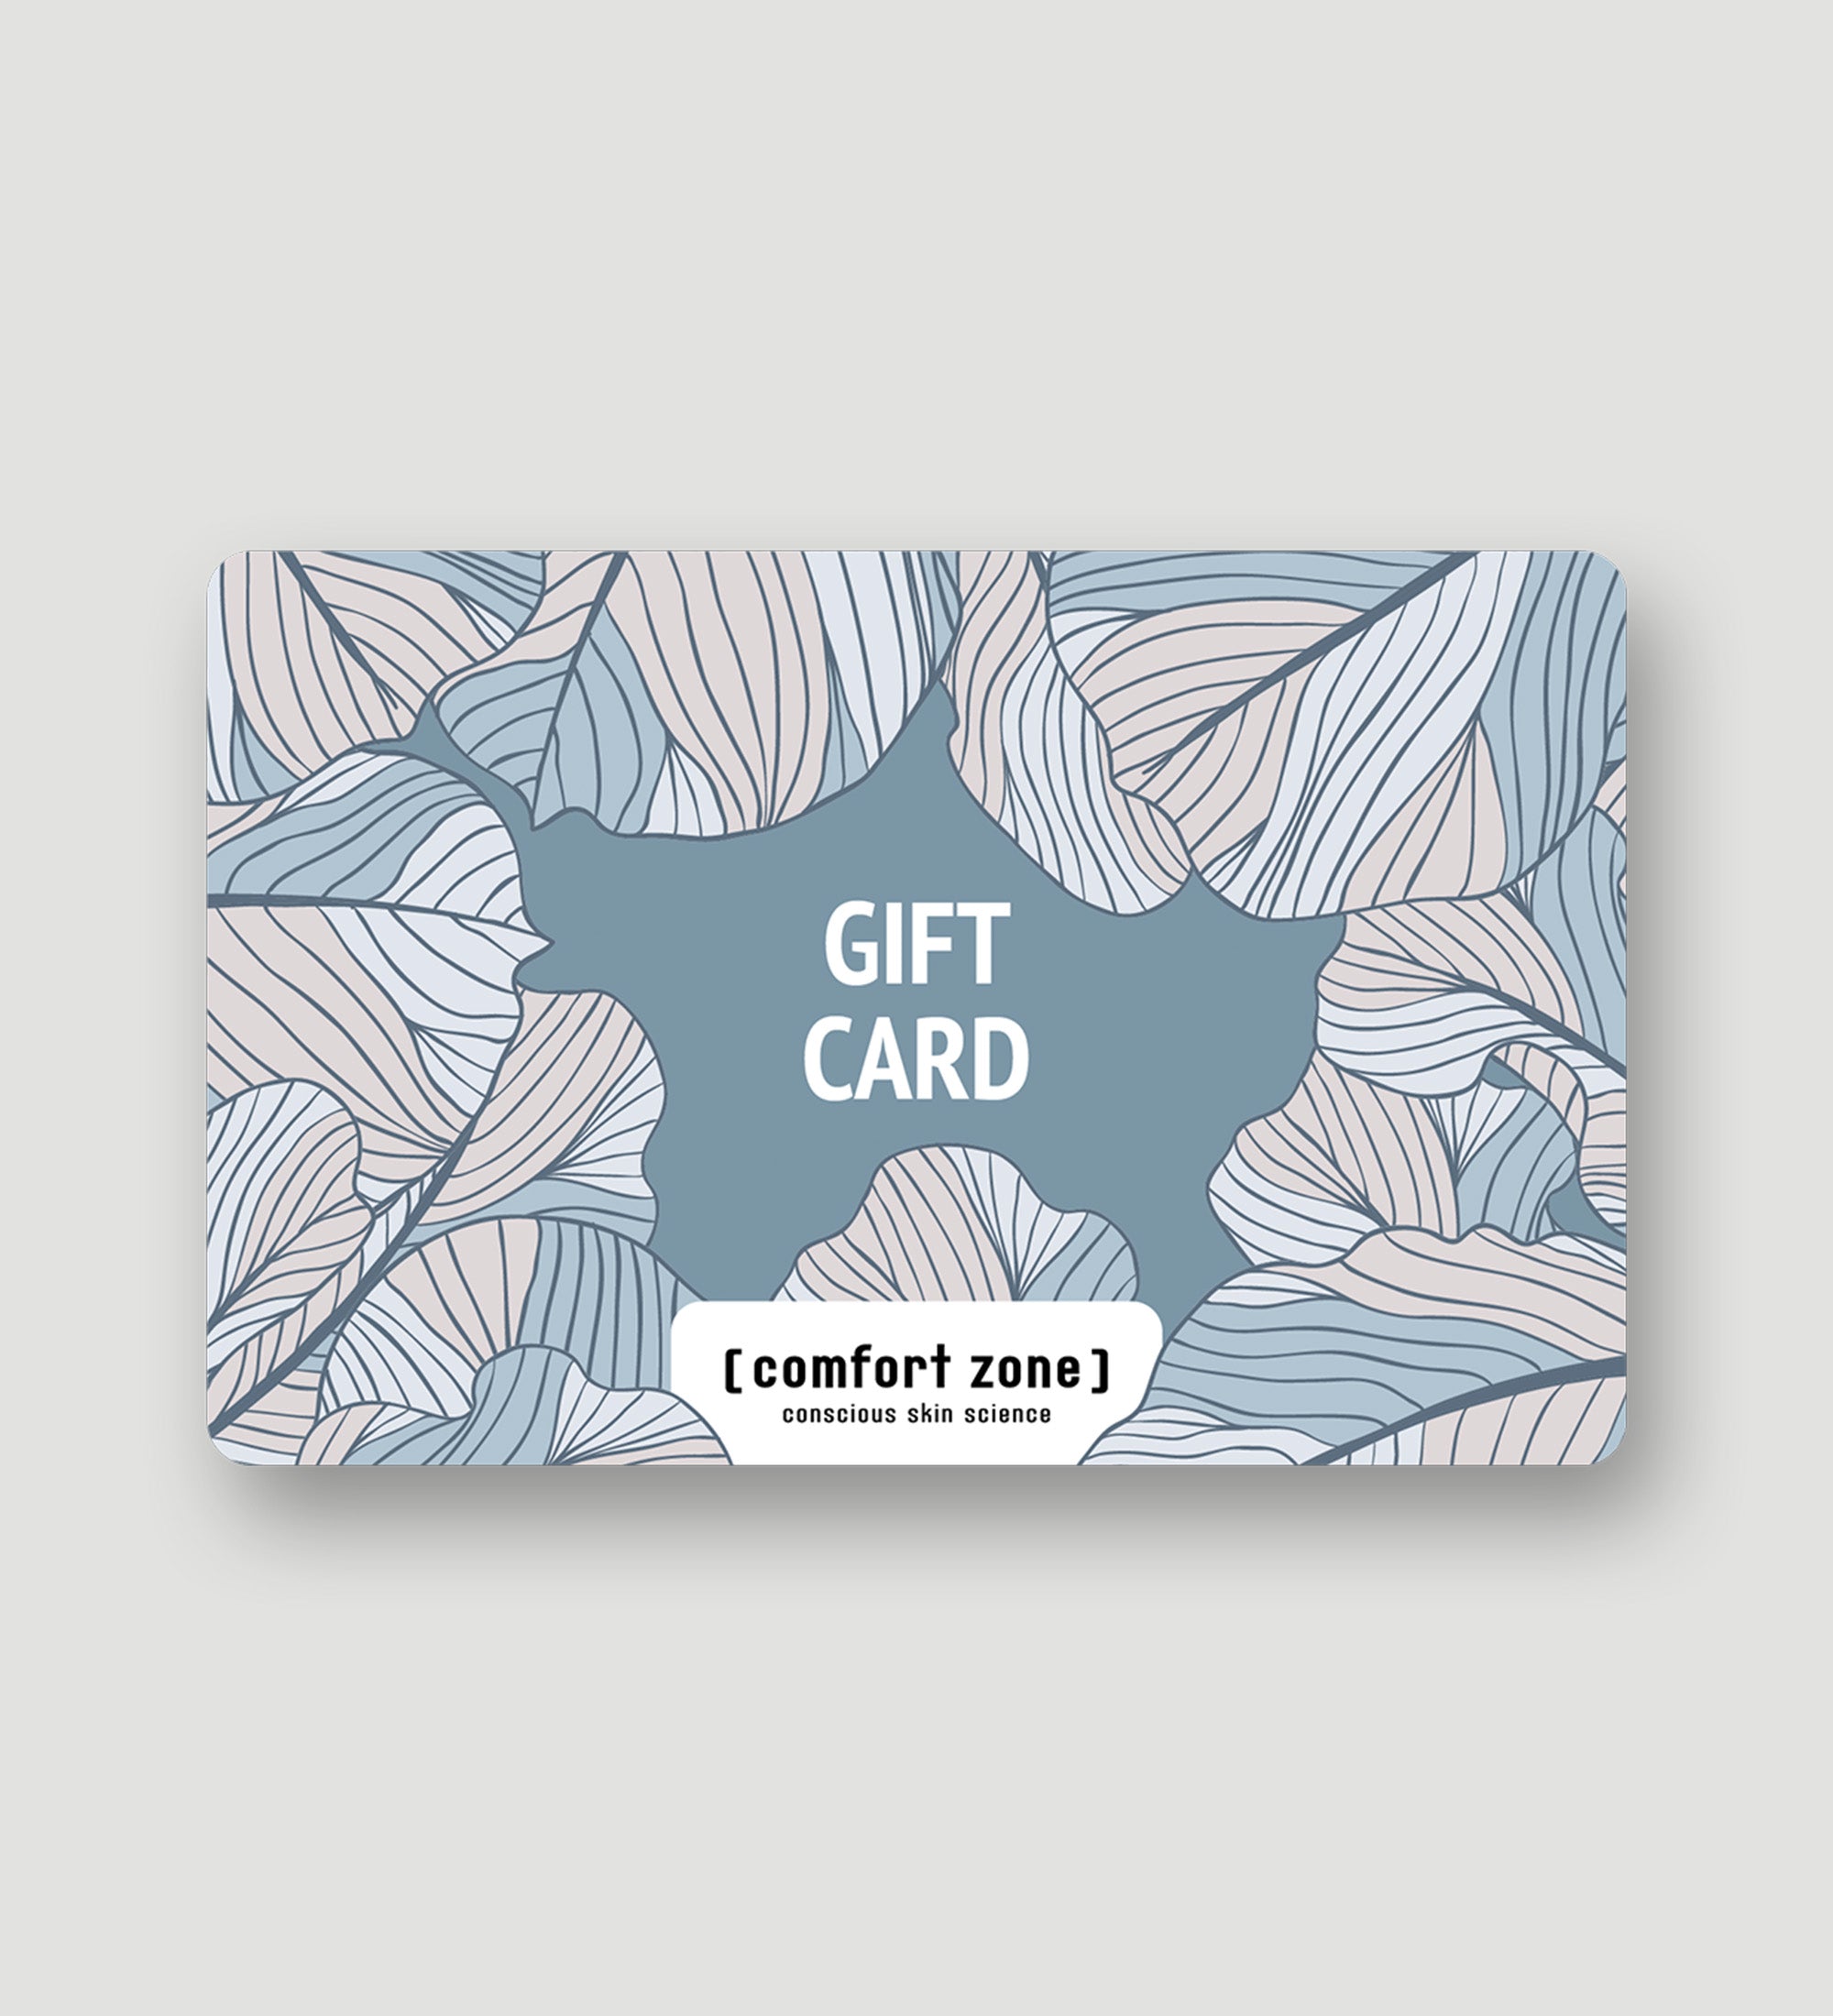 Comfort Zone: gift_card E-GIFT CARD <span data-mce-fragment="1">Digital Gift Card-
